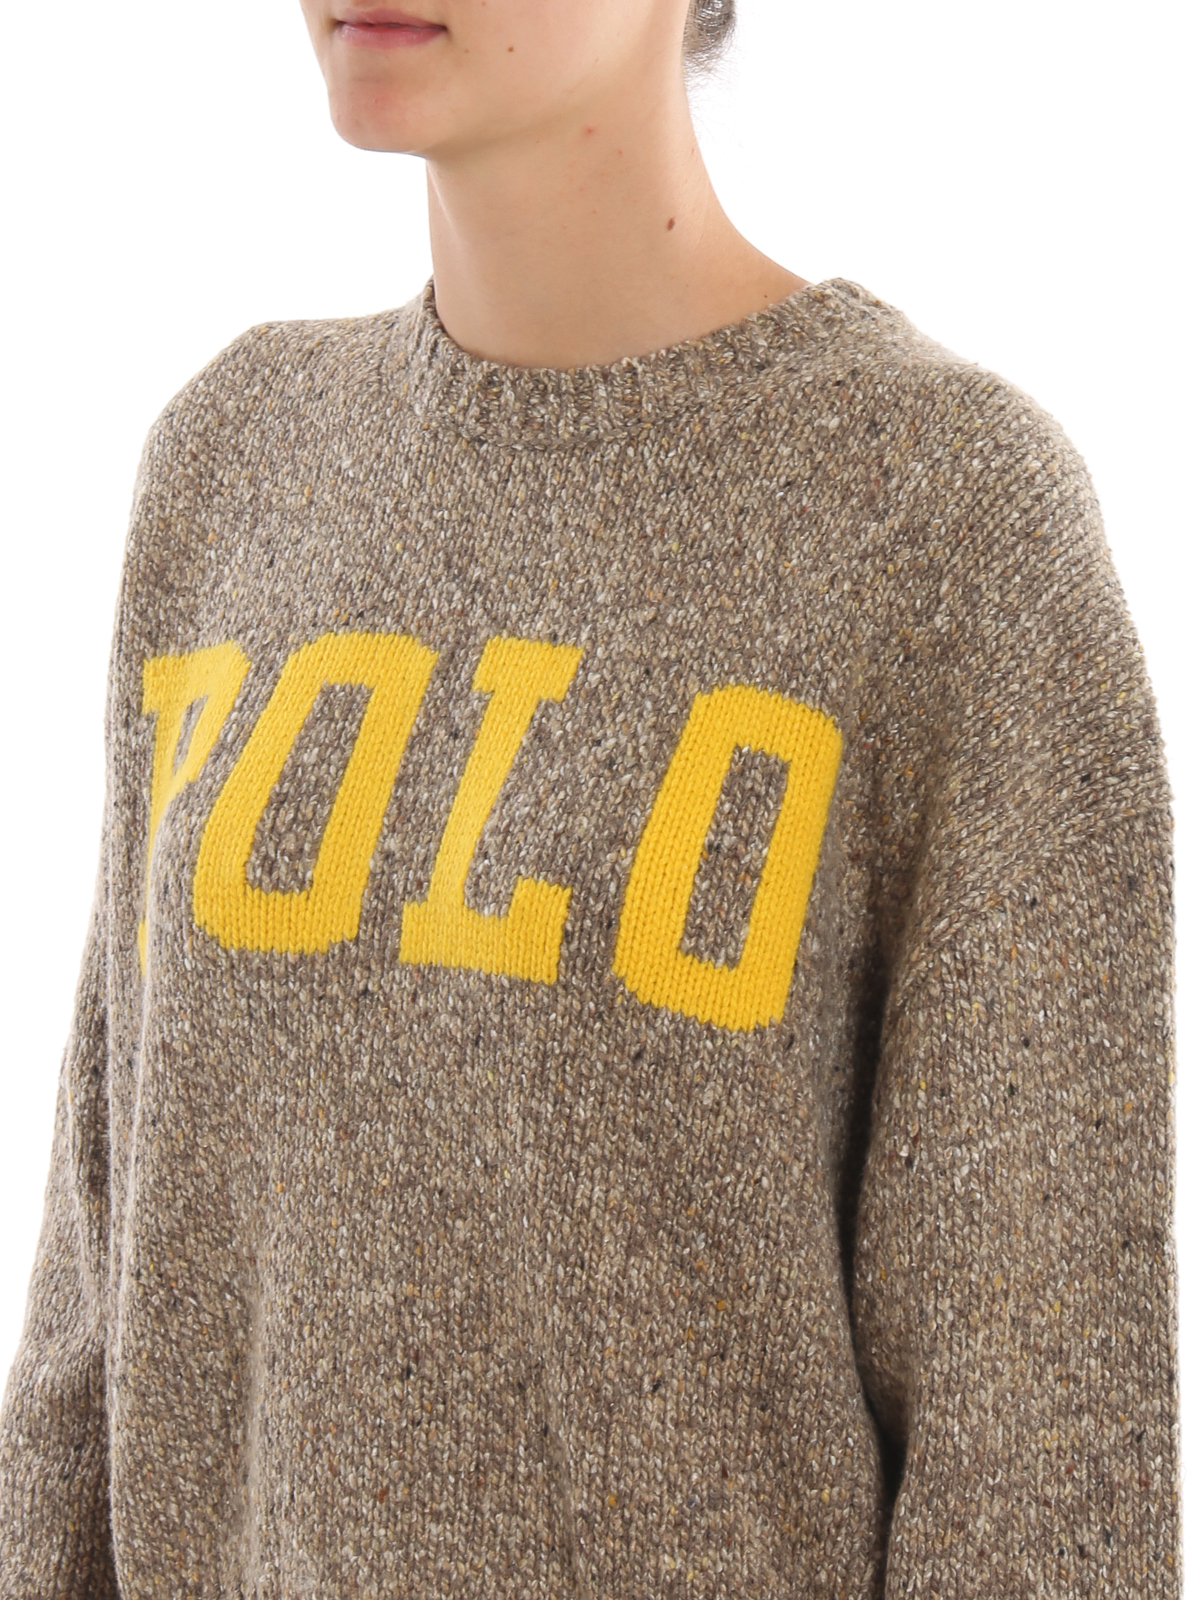 polo logo sweater